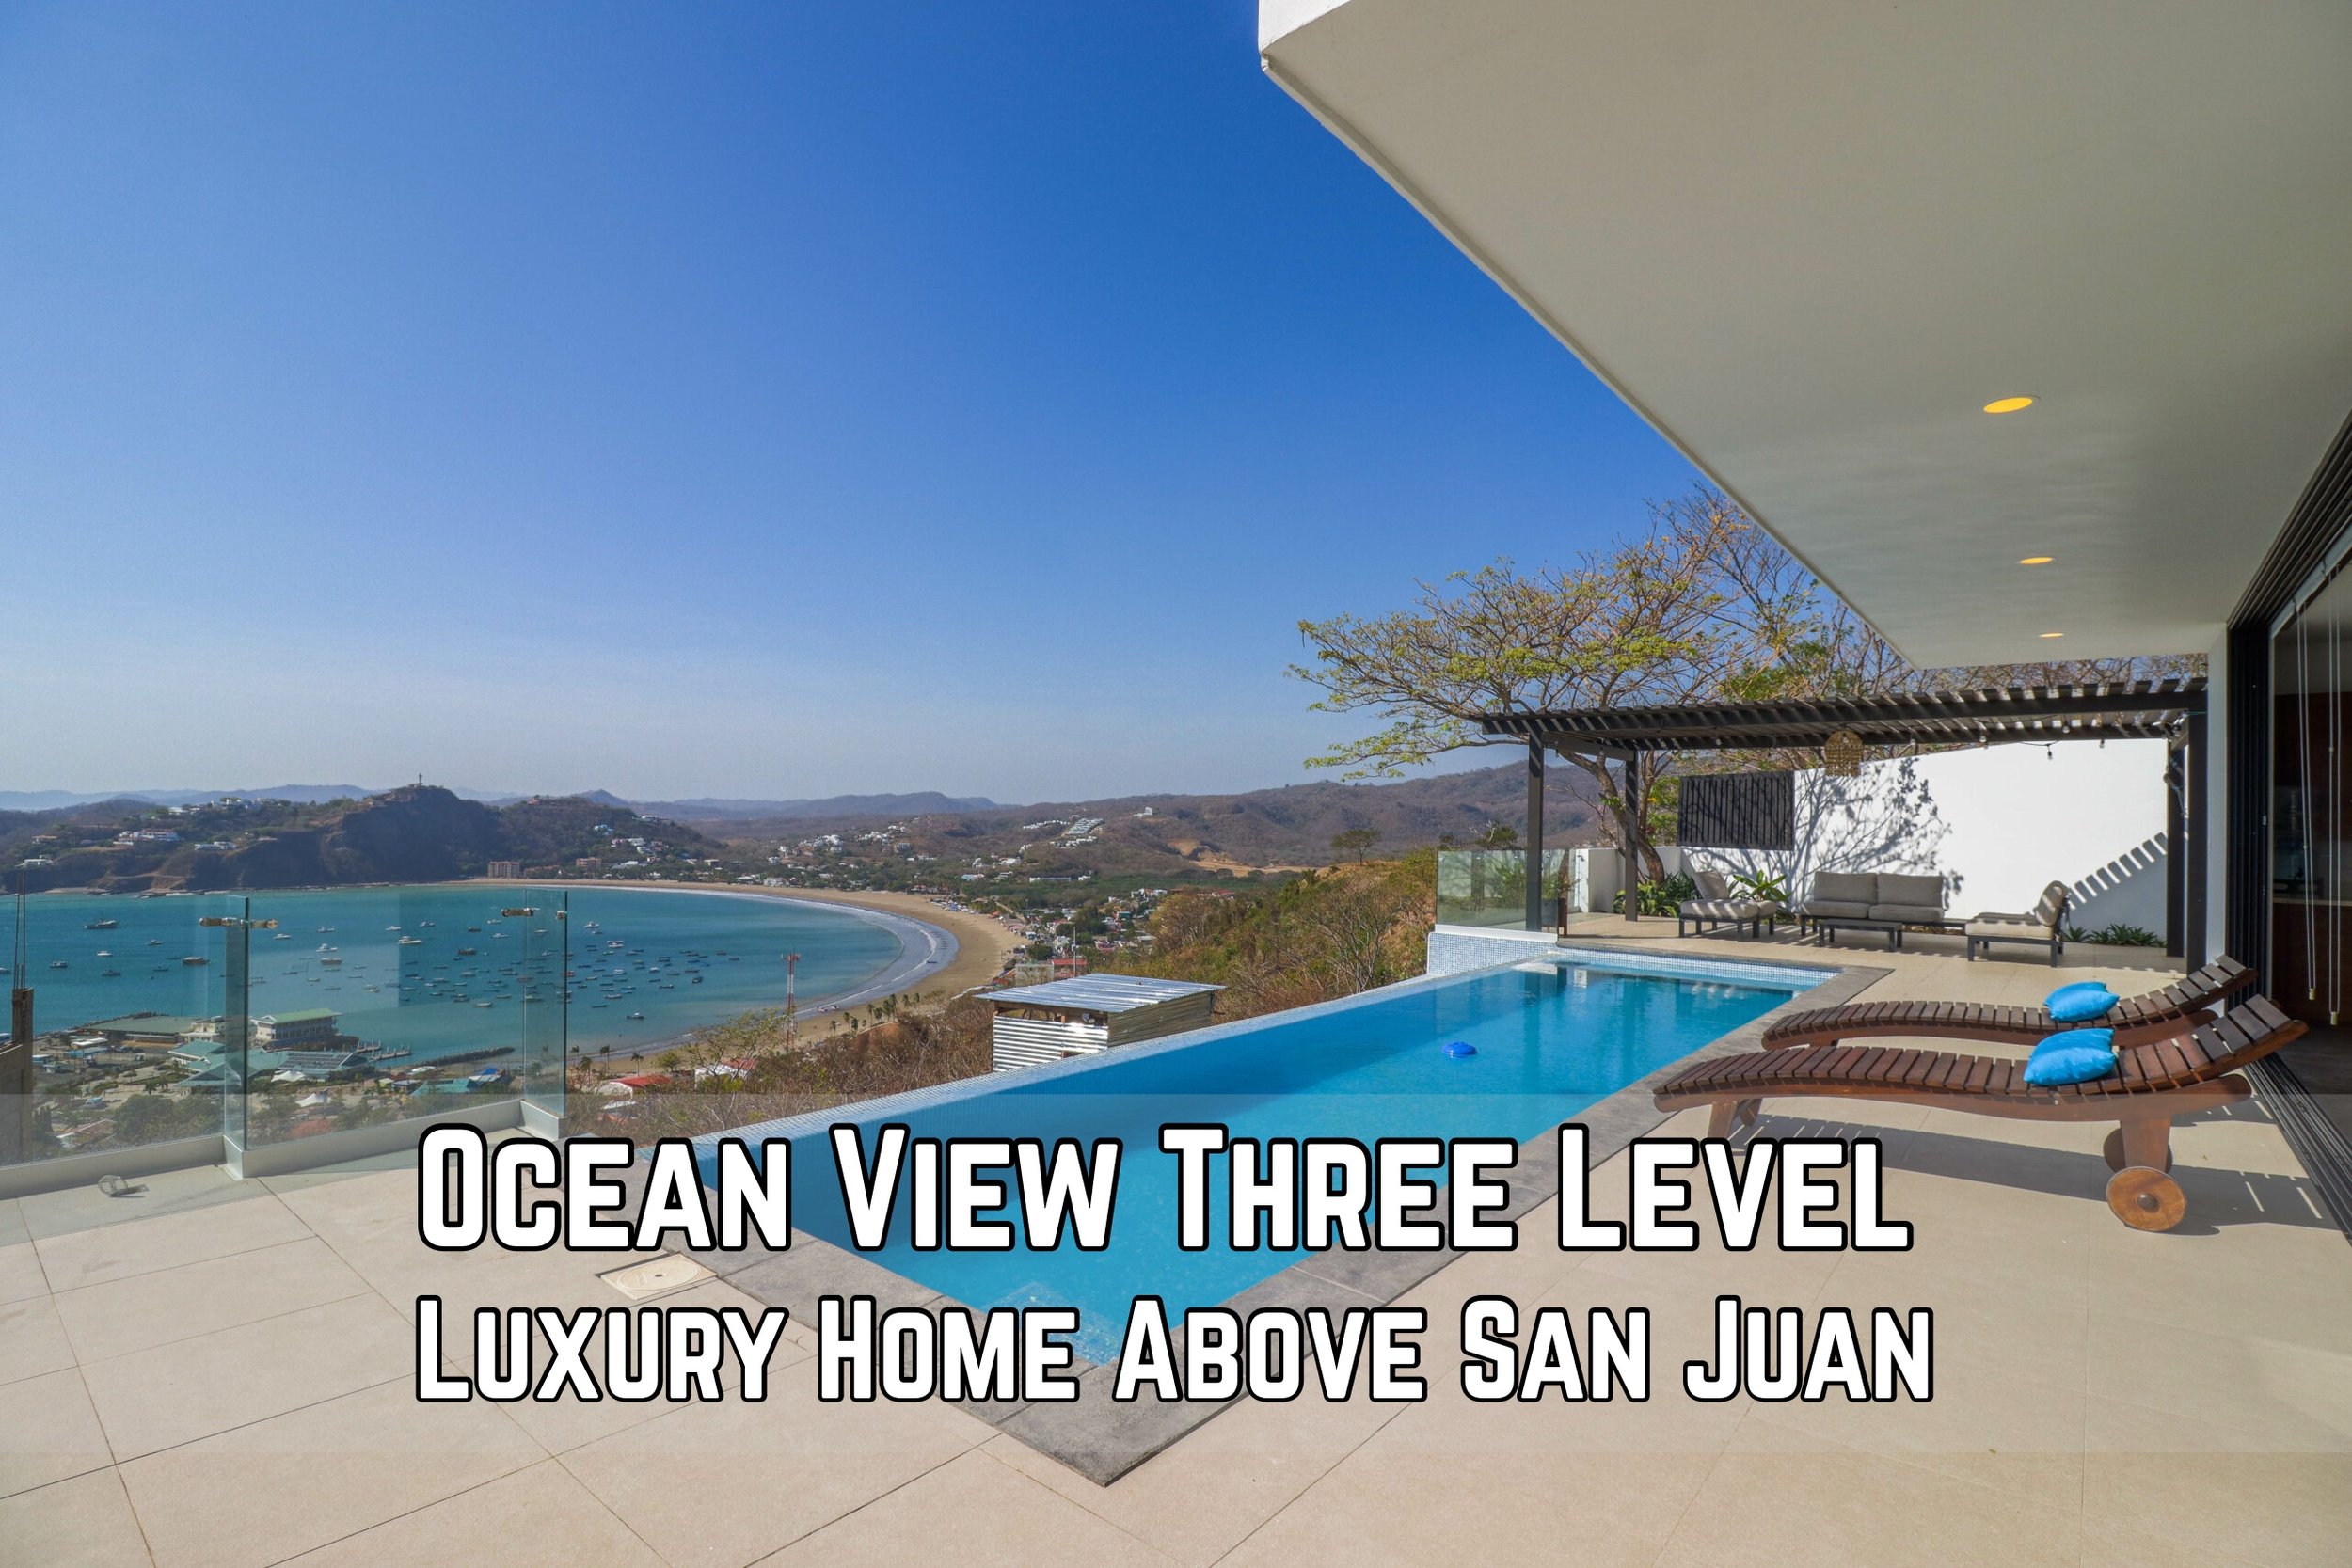 Luxury Ocean View Home House Real Estate Property For Sale San Juan Del Sur Nicaragua-2.jpg